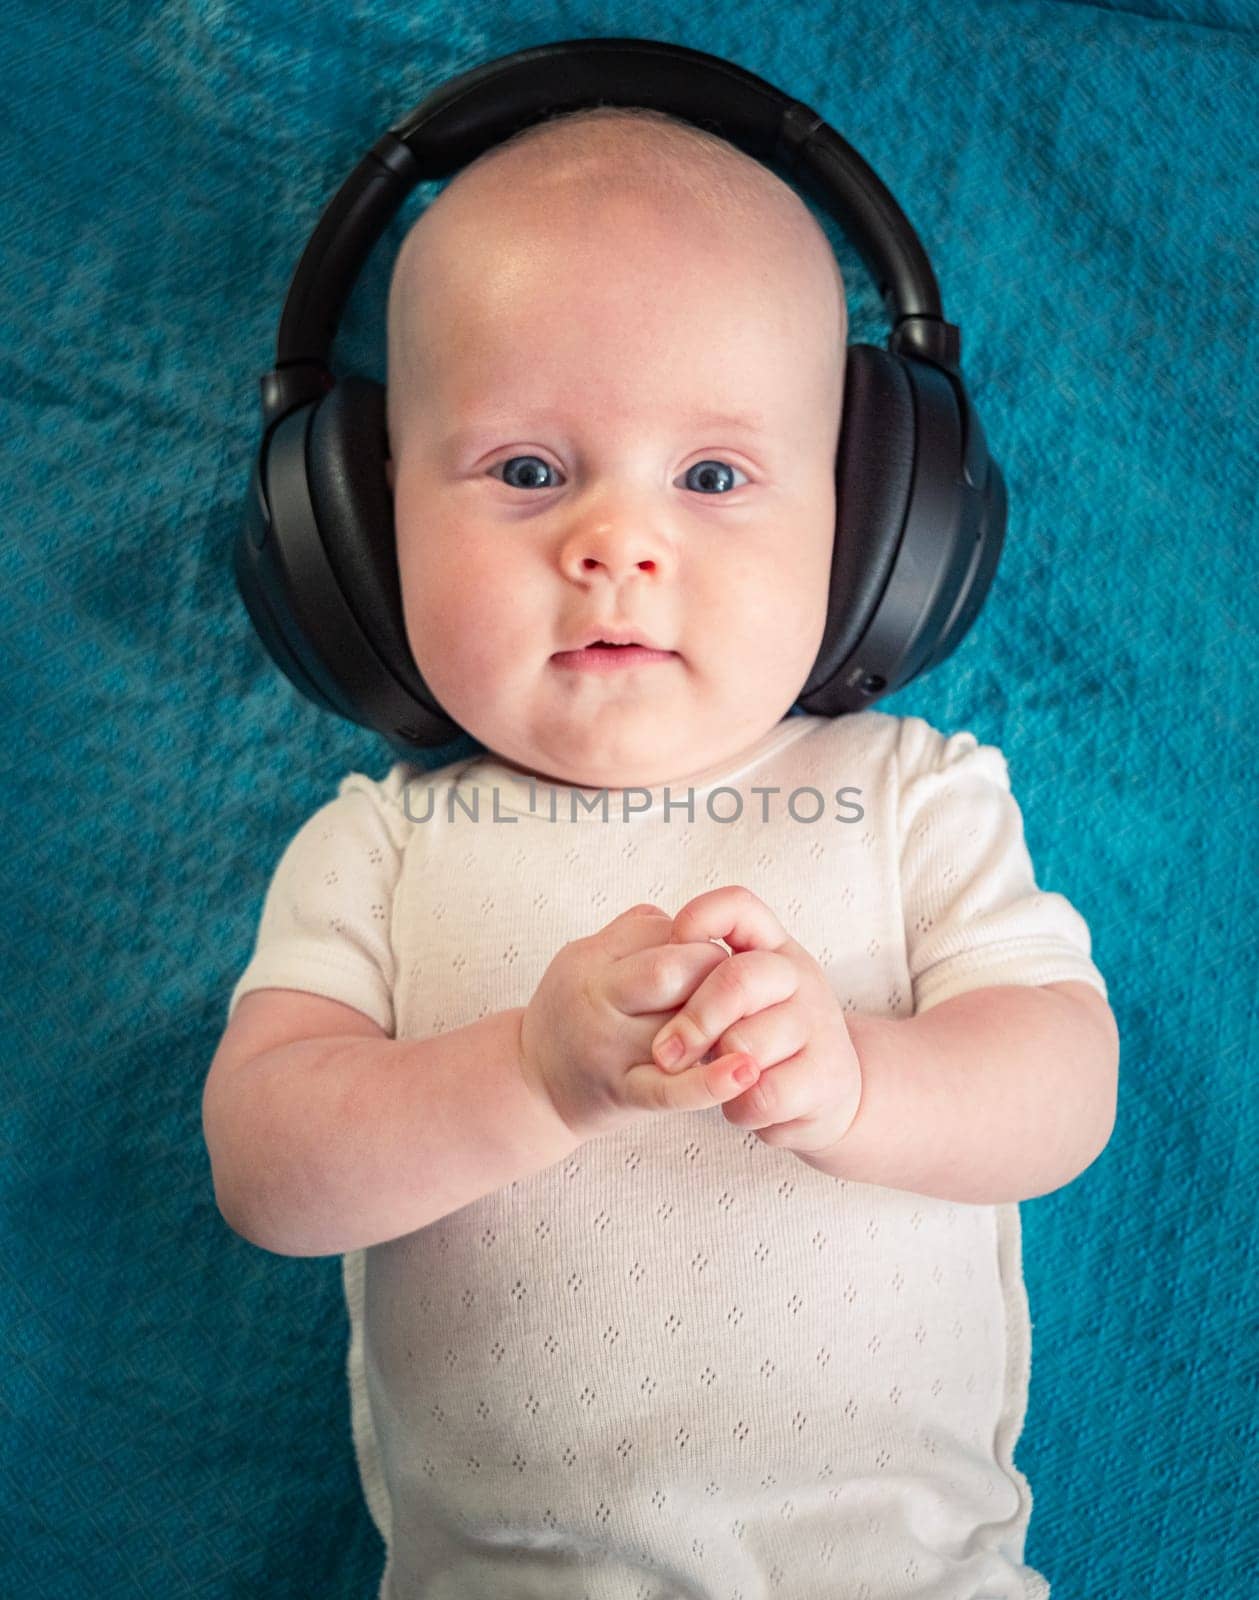 Little boy on blue blanket background with black wireless headphones by Busker